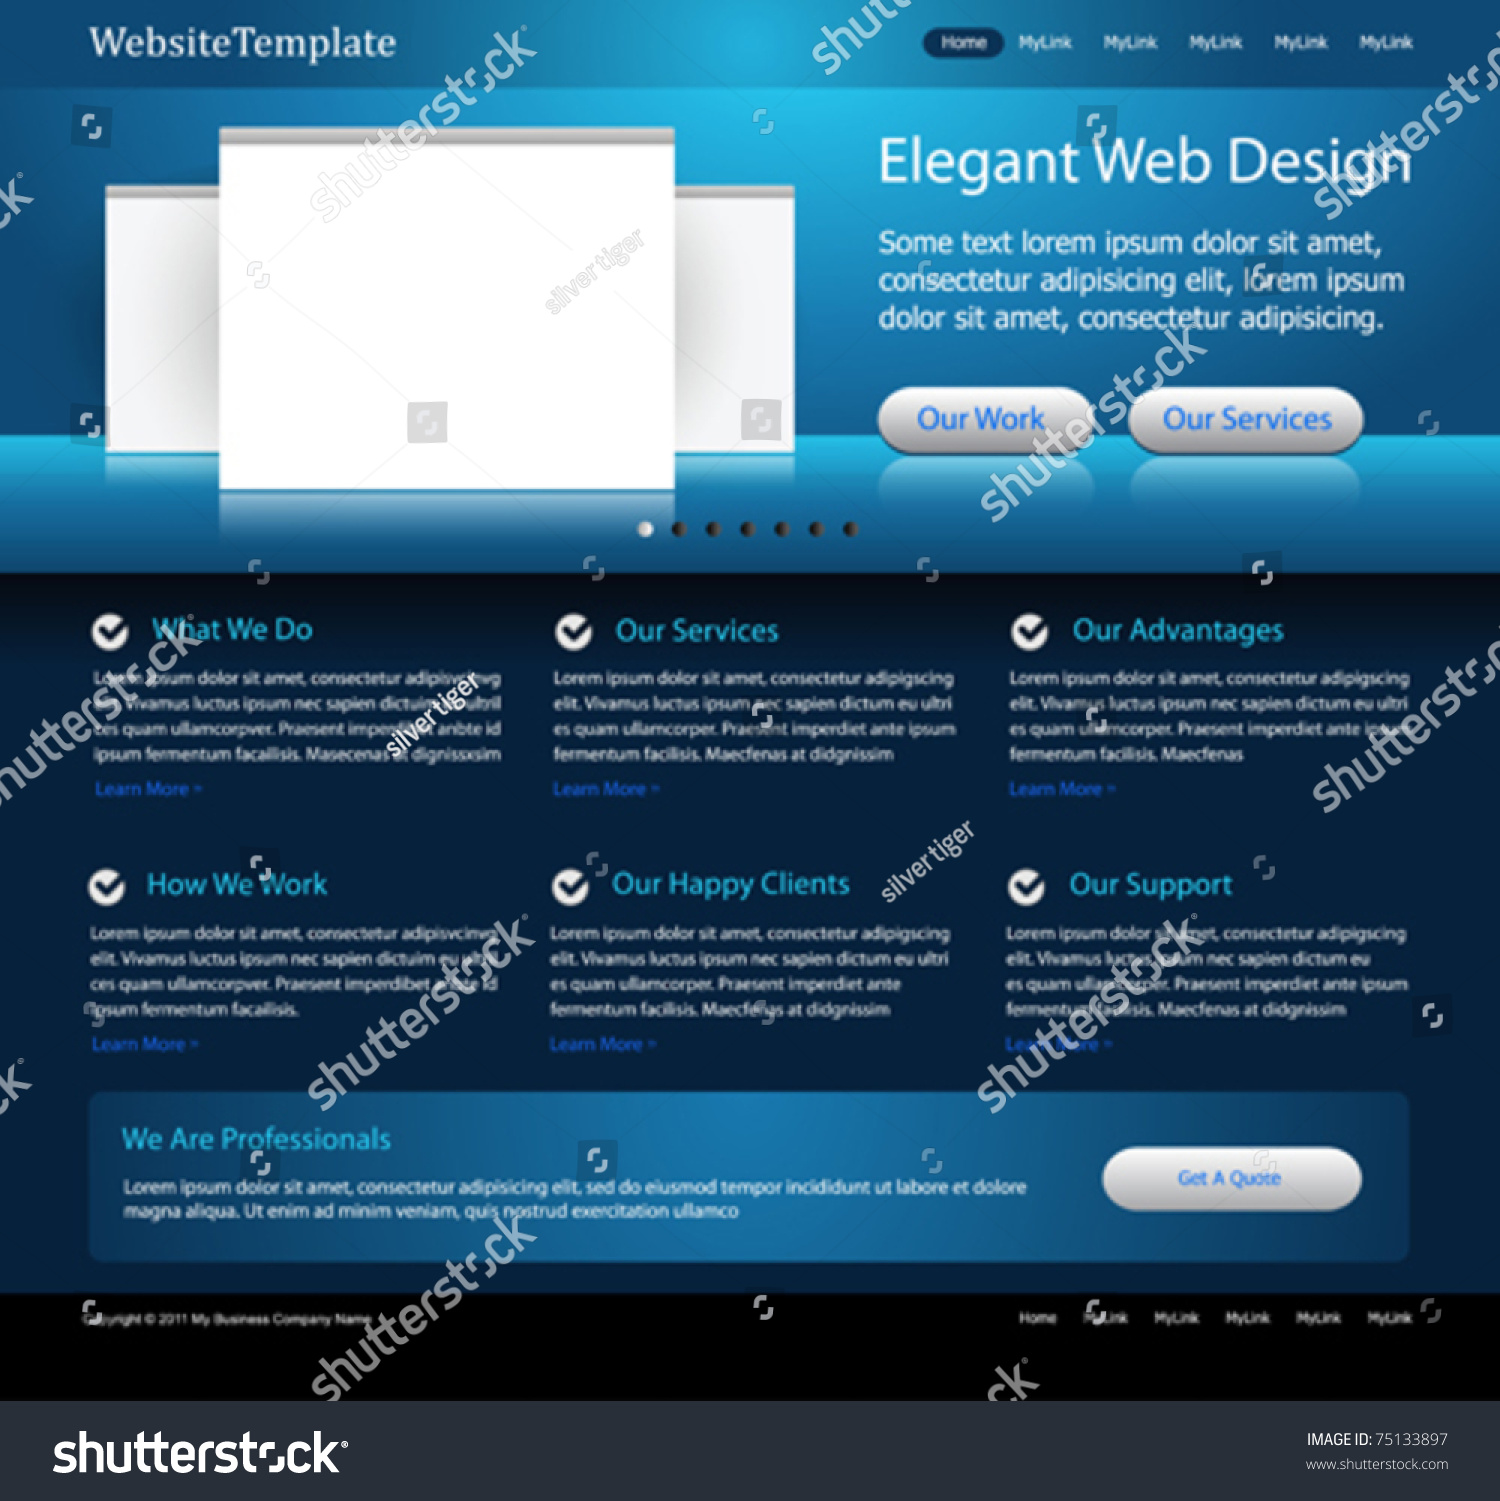 dark-blue-website-design-template-stock-vector-illustration-75133897